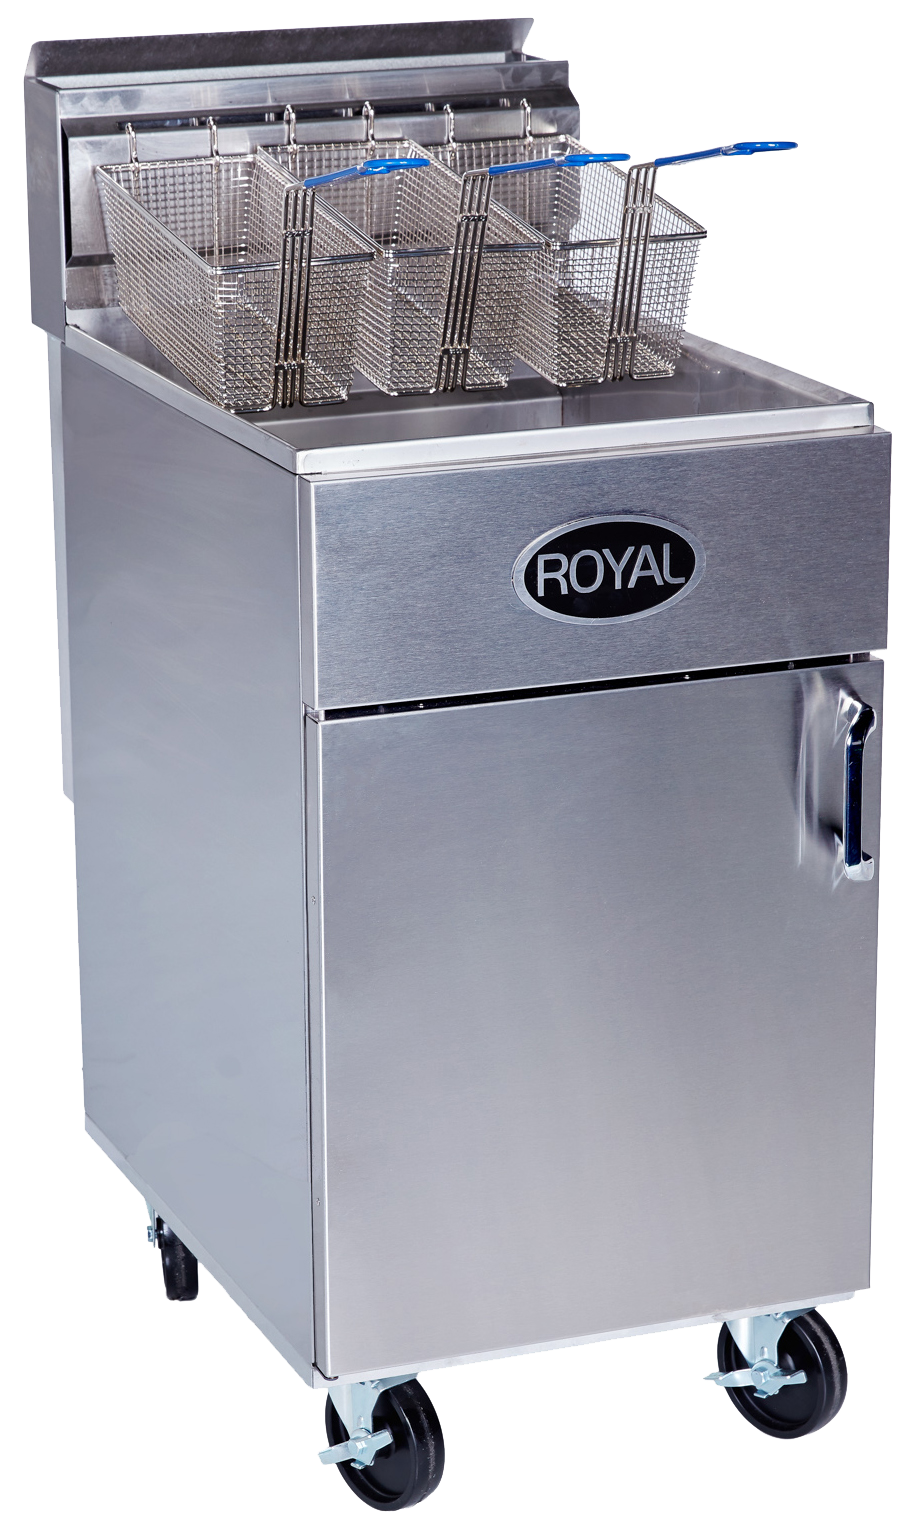 Royal Range RFT-60 Gas Floor Fryer